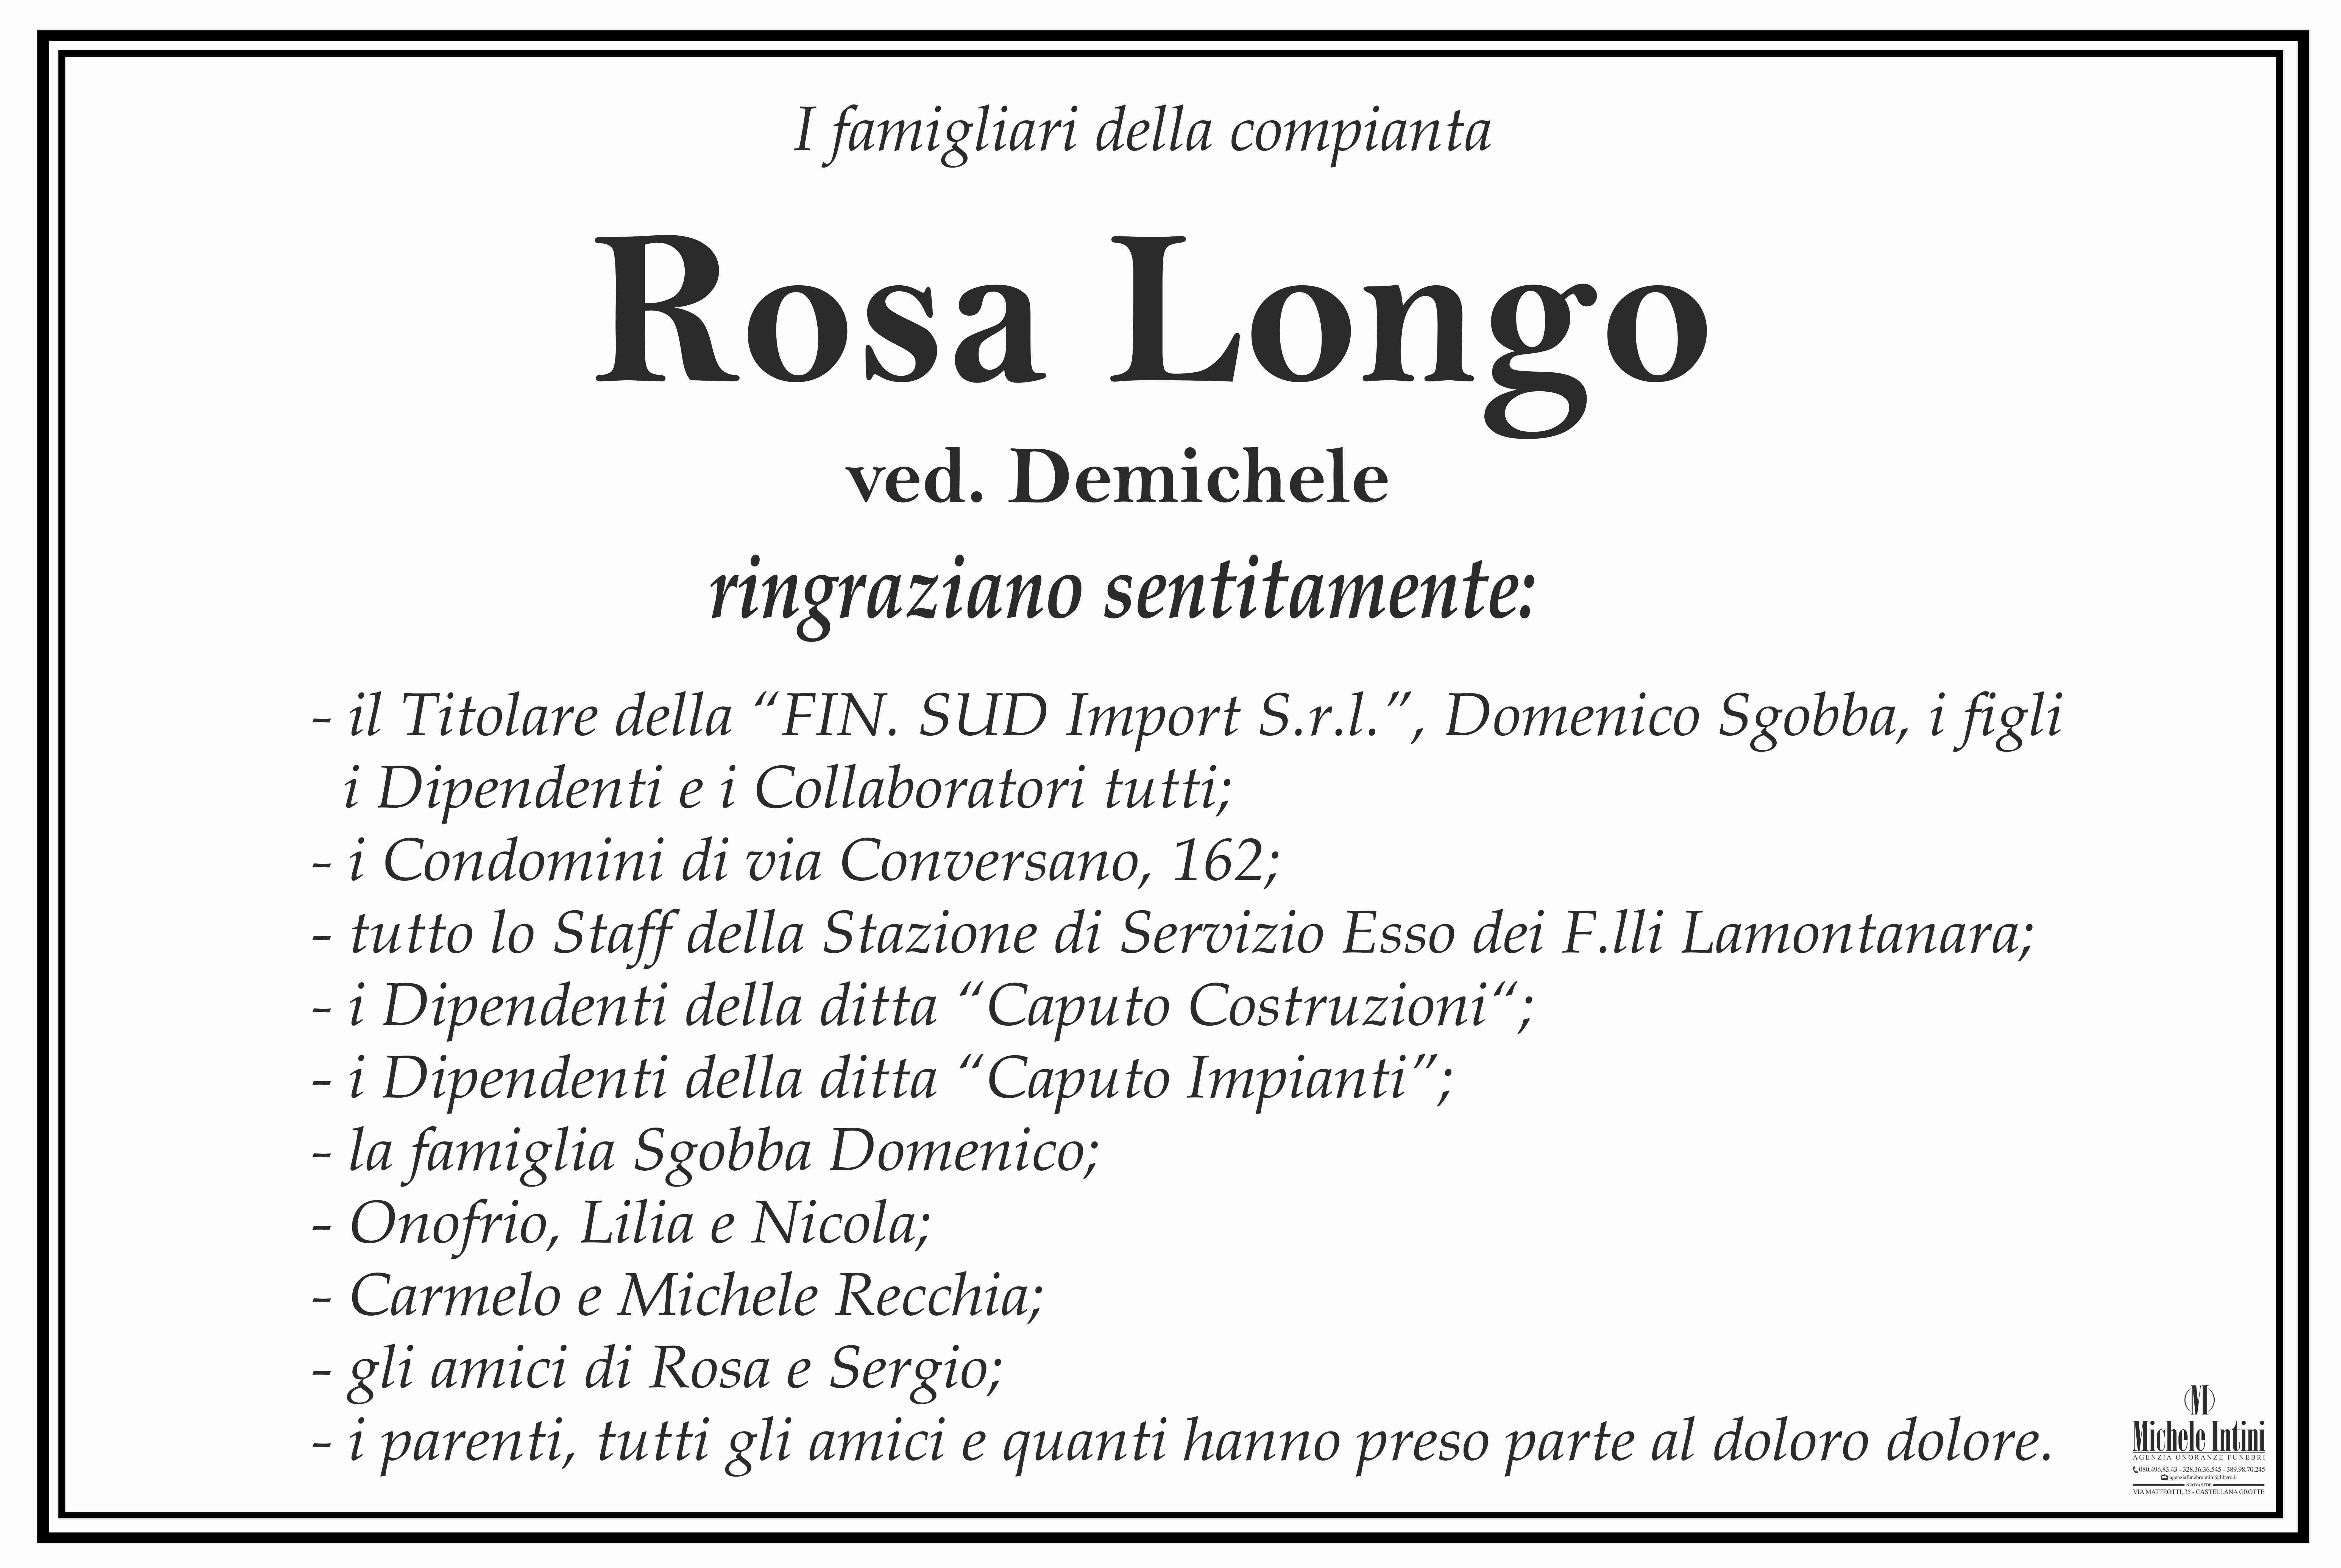 Rosa Longo